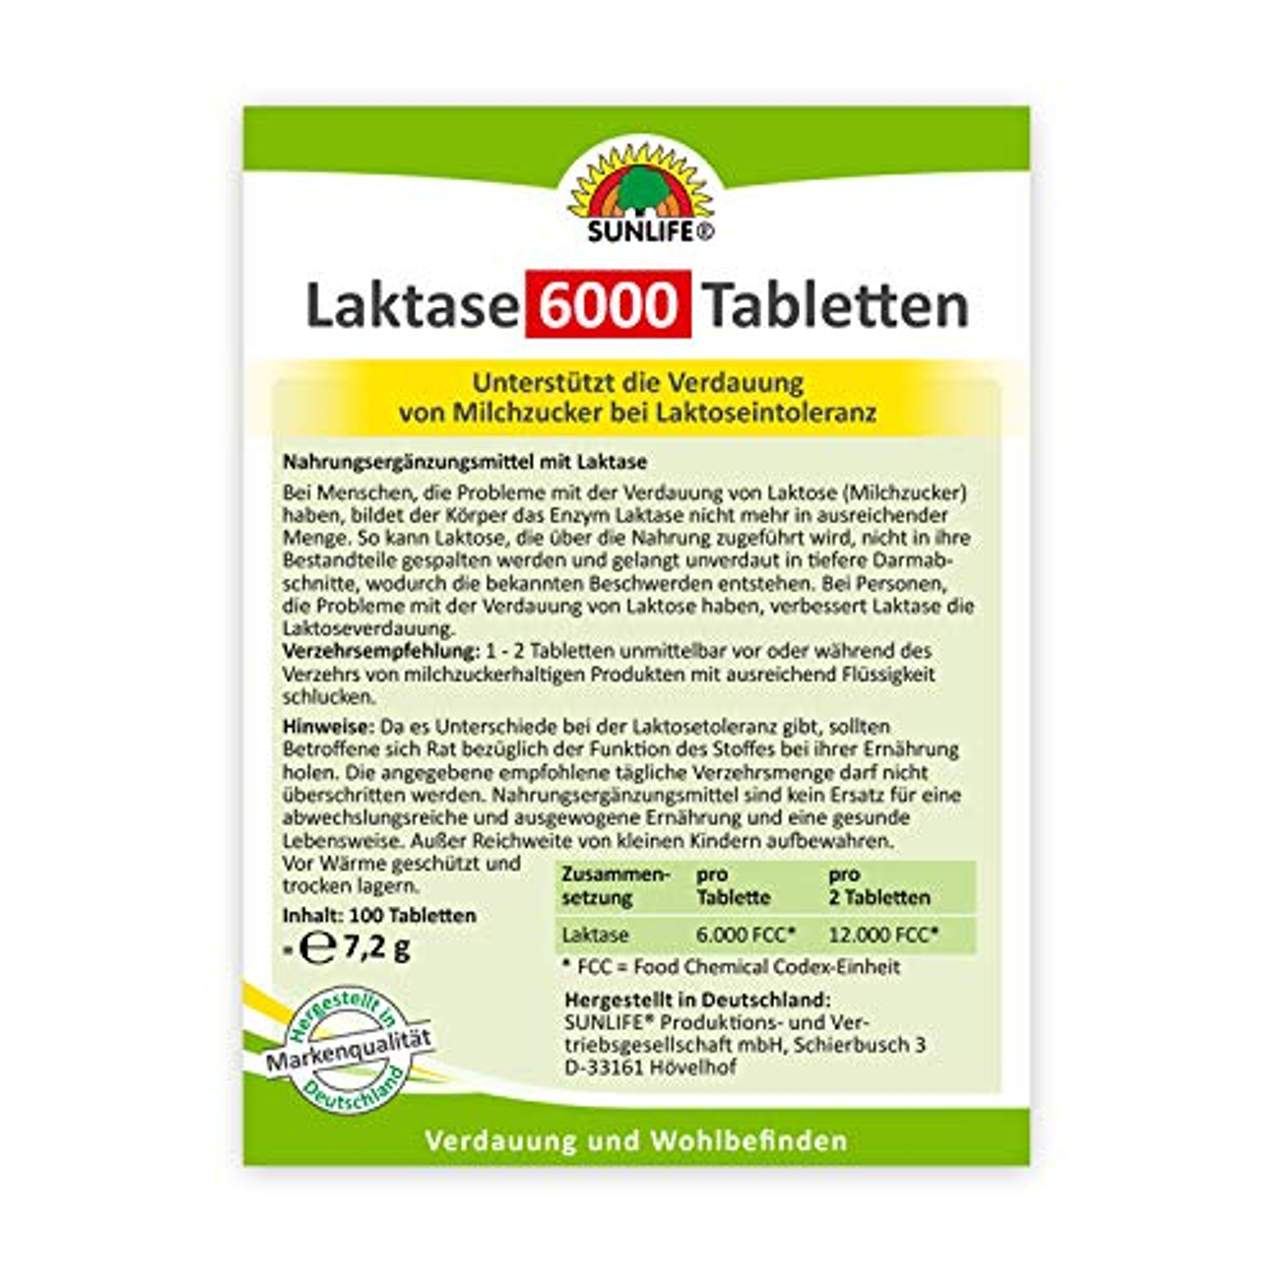 Sunlife Laktasetabletten 6.000 FCC im Klickspender: bei Lactoseintoleranz